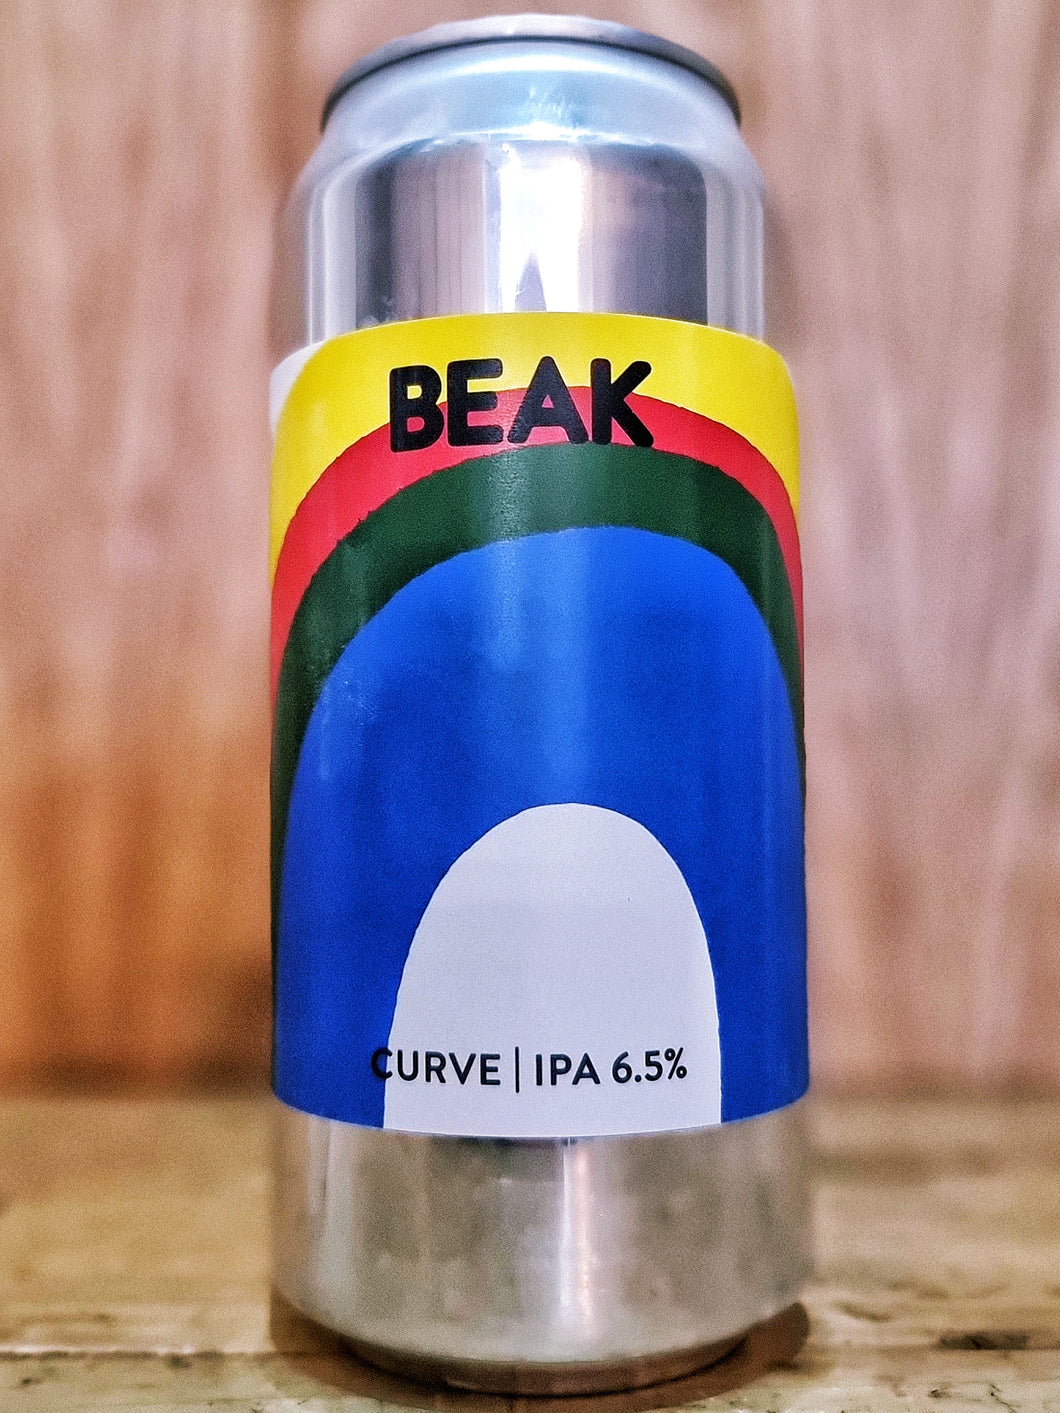 Beak Brewery - Curve